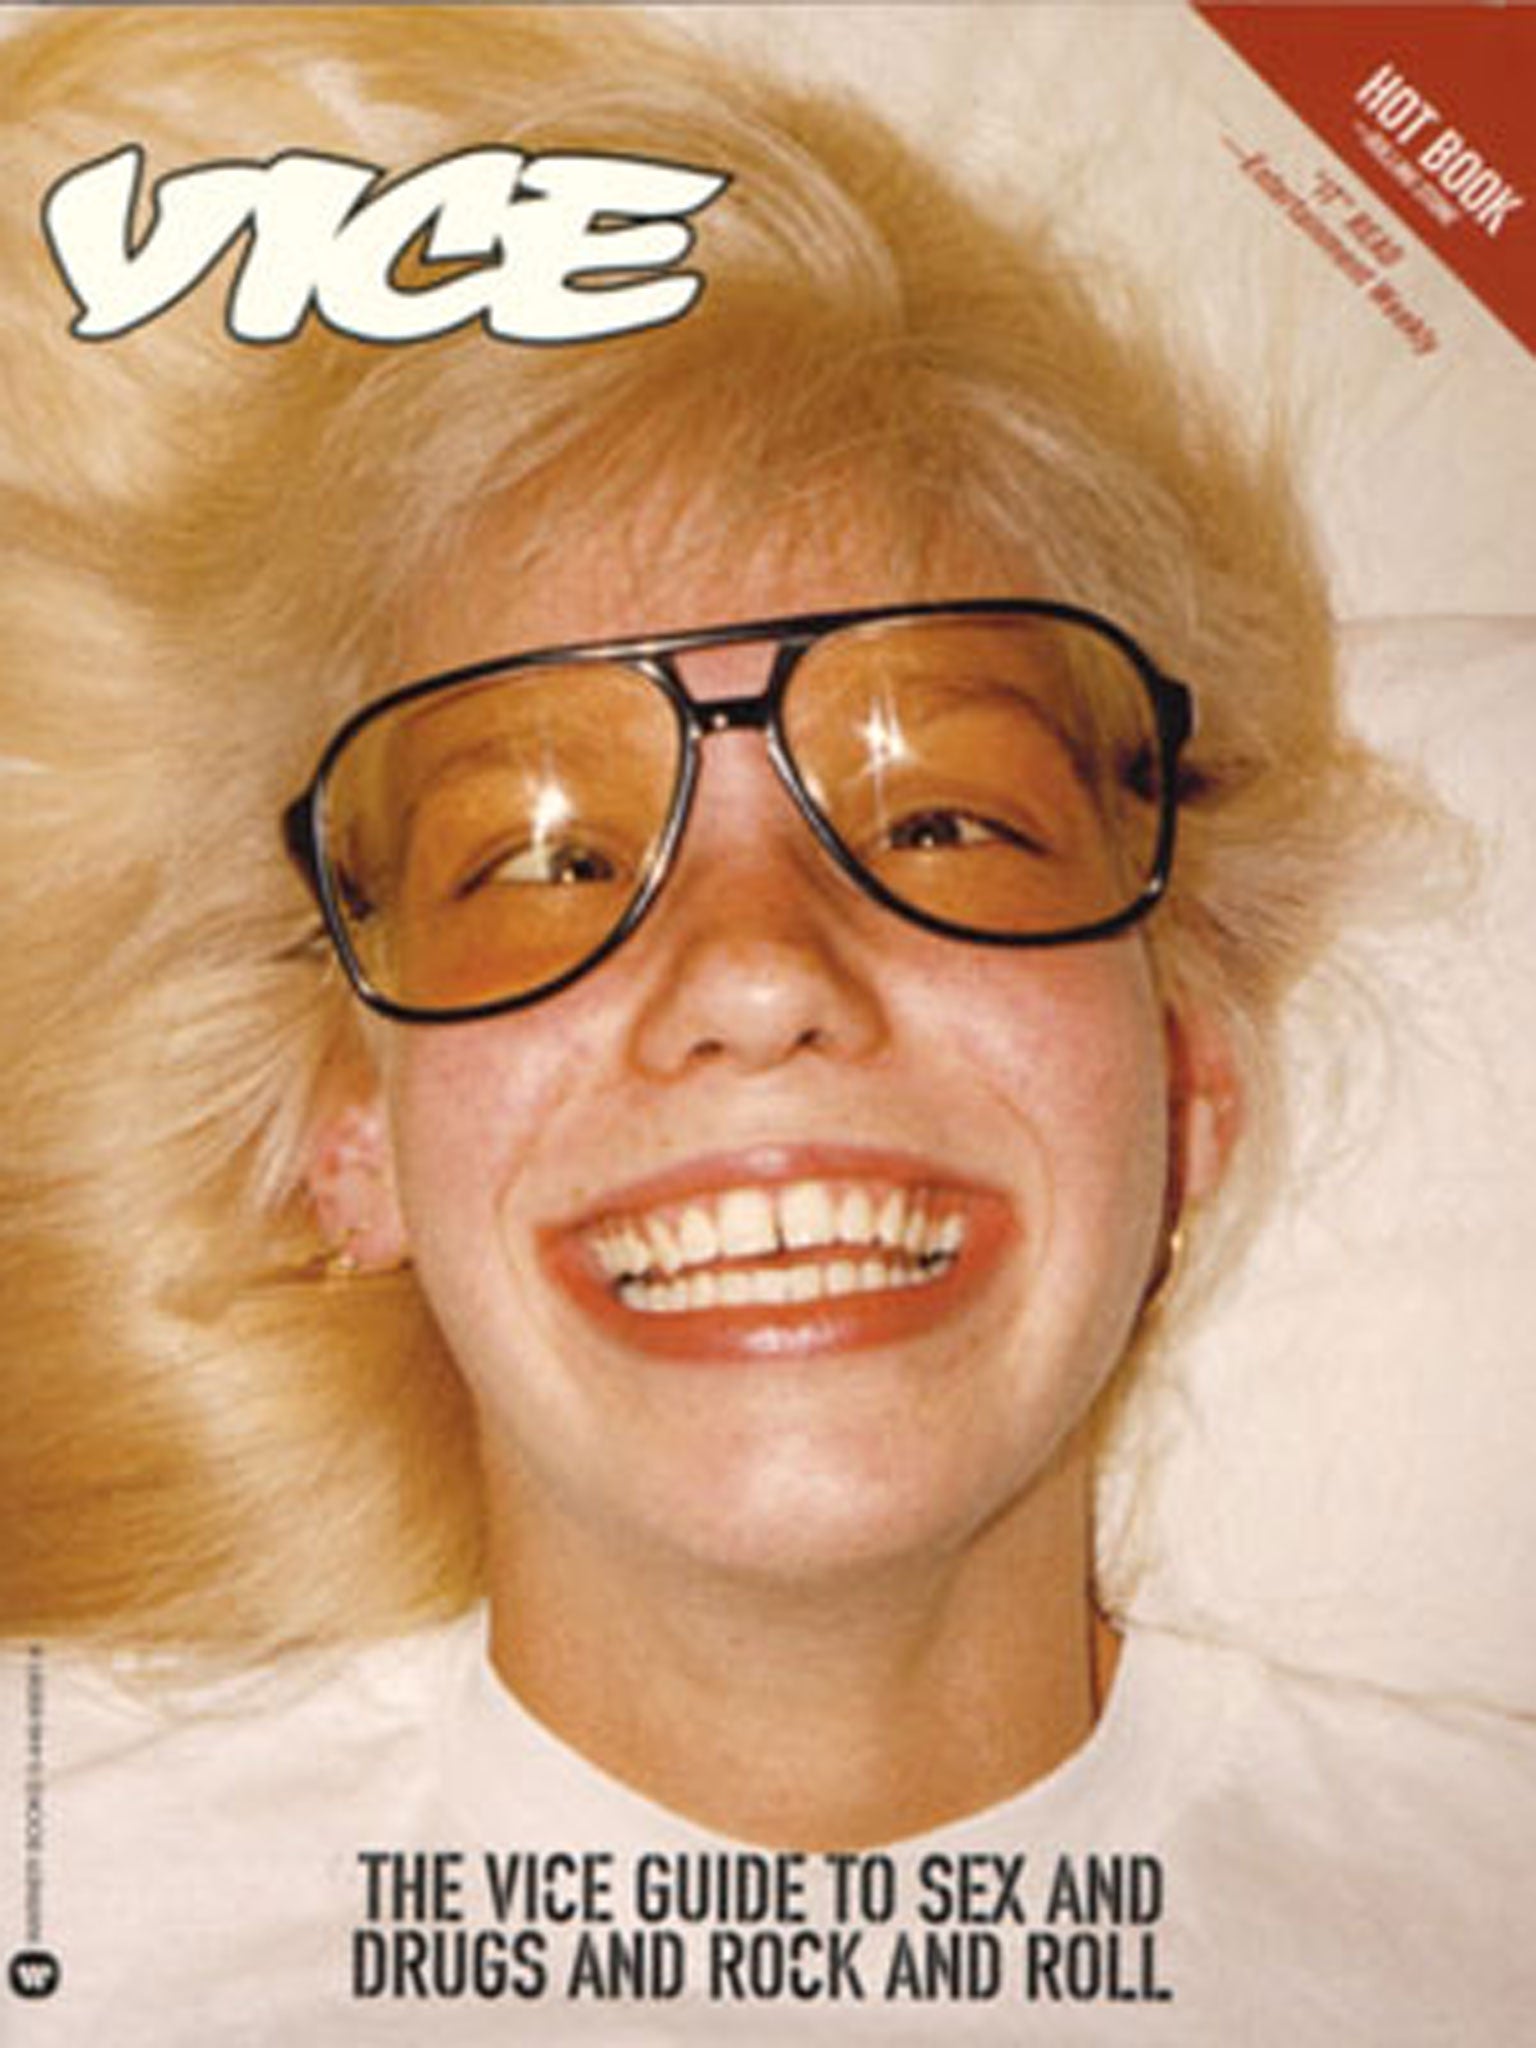 A copy of vice magazine